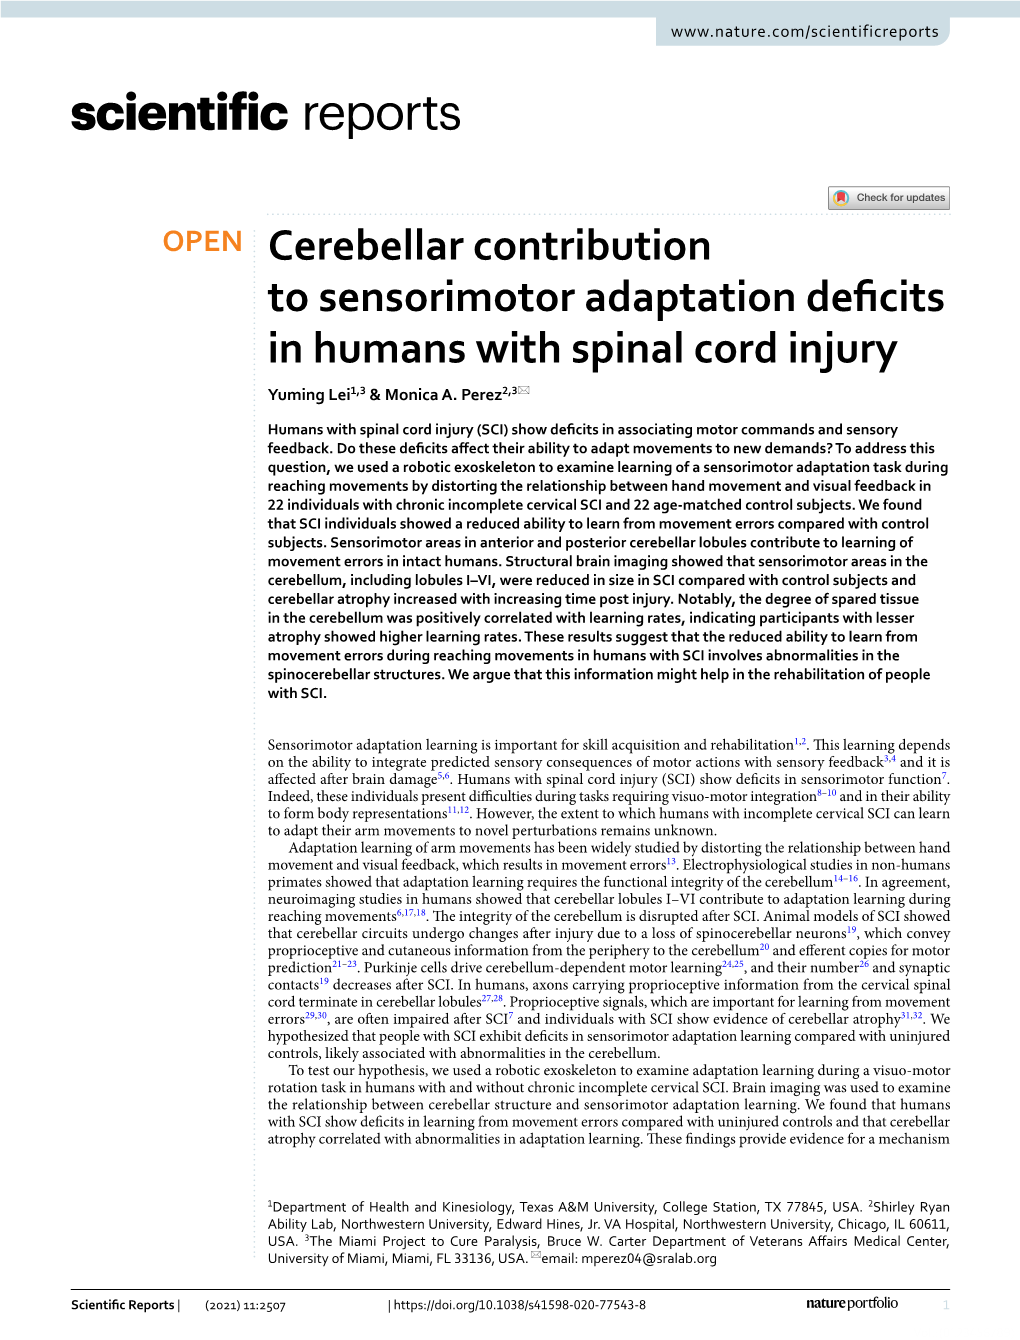 Cerebellar Contribution to Sensorimotor Adaptation Deficits In